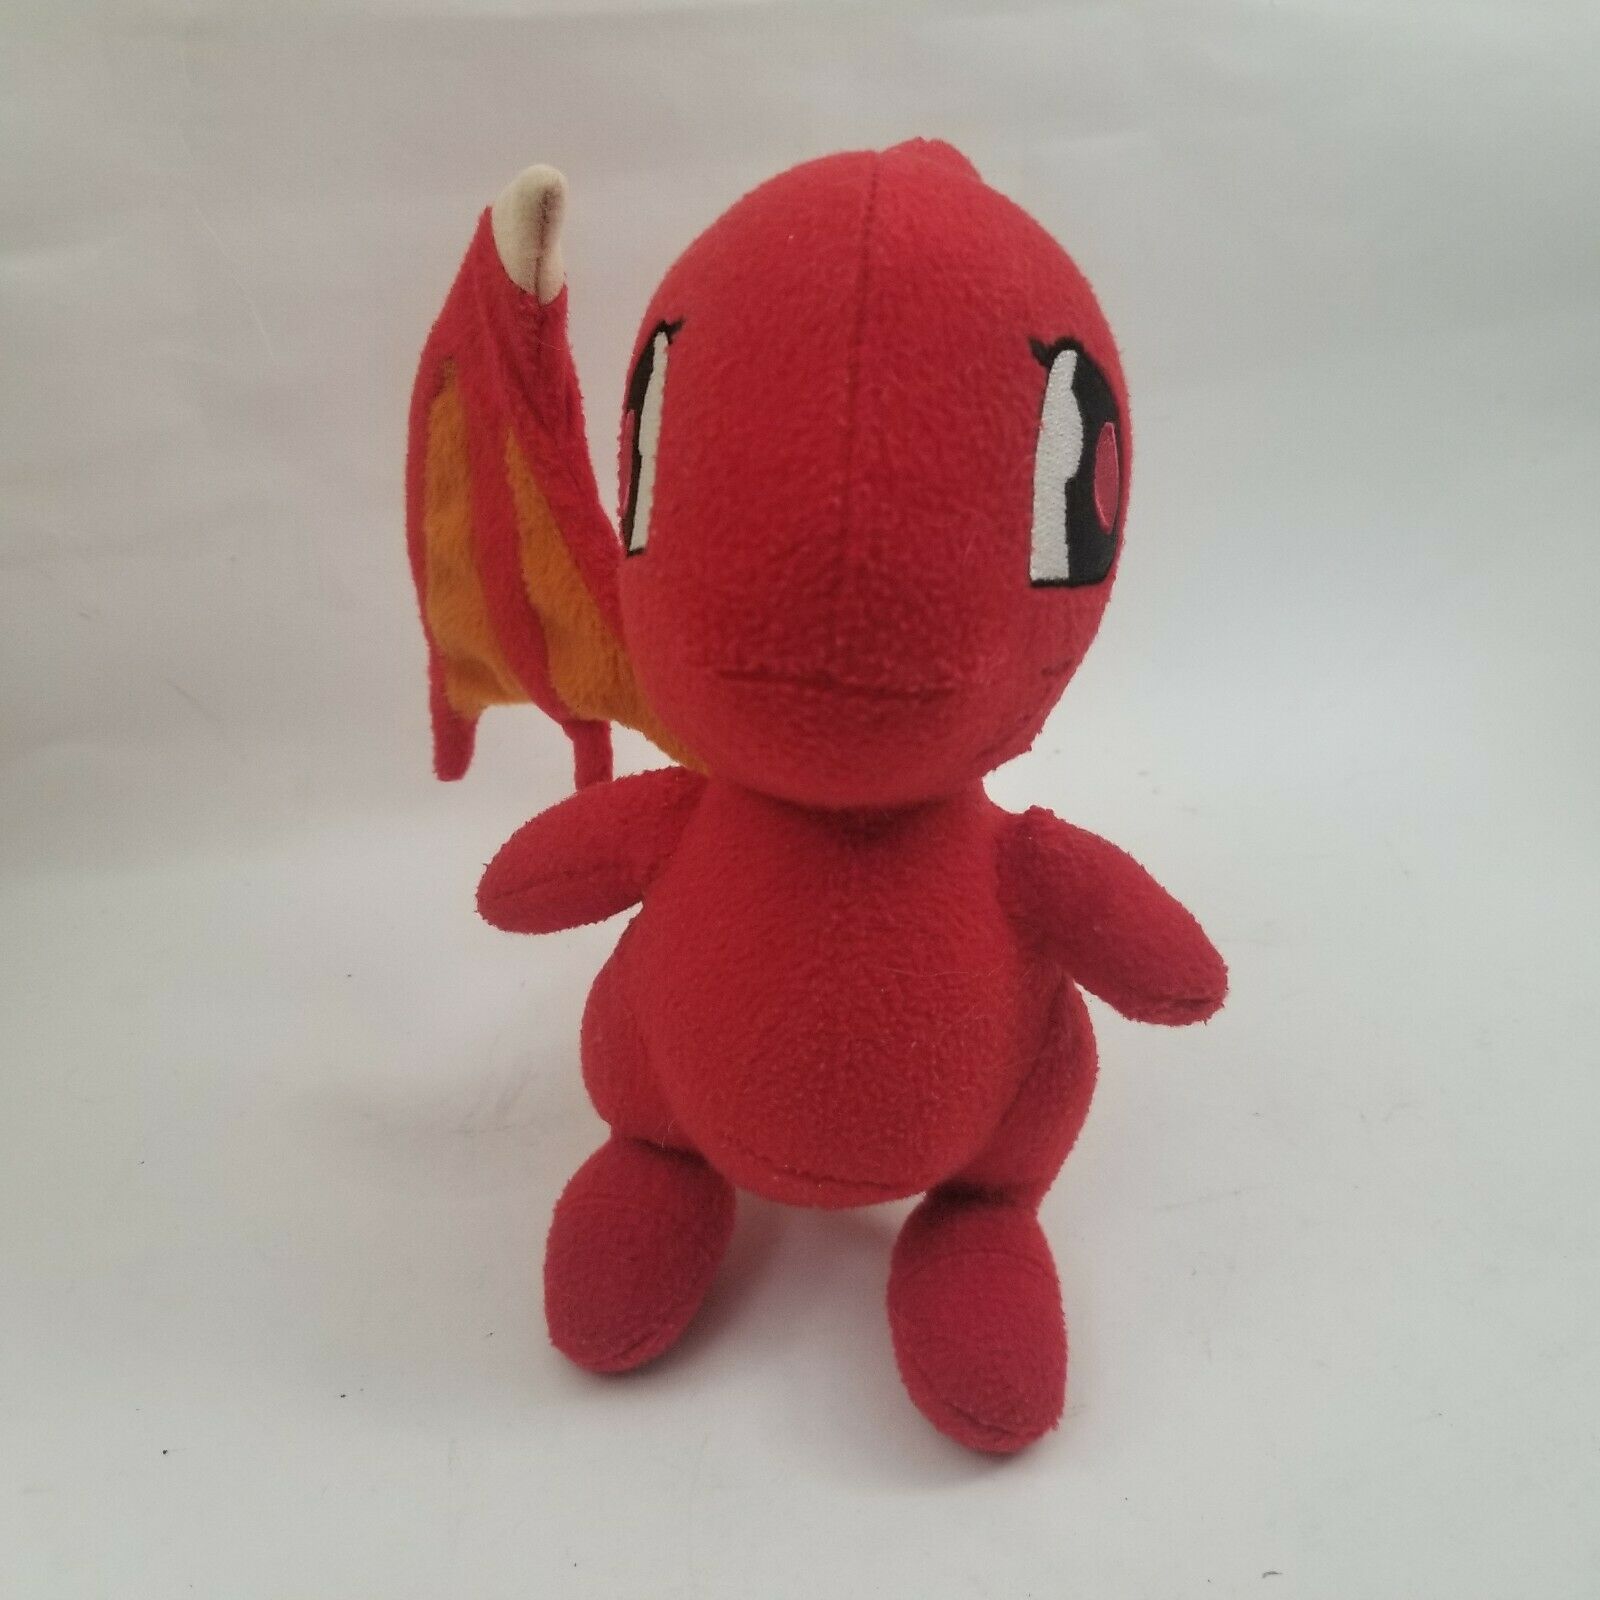 2003 Gen 1 Neopets Shoyru Red Dragon  7" Plush Stuffed Animal Collectible